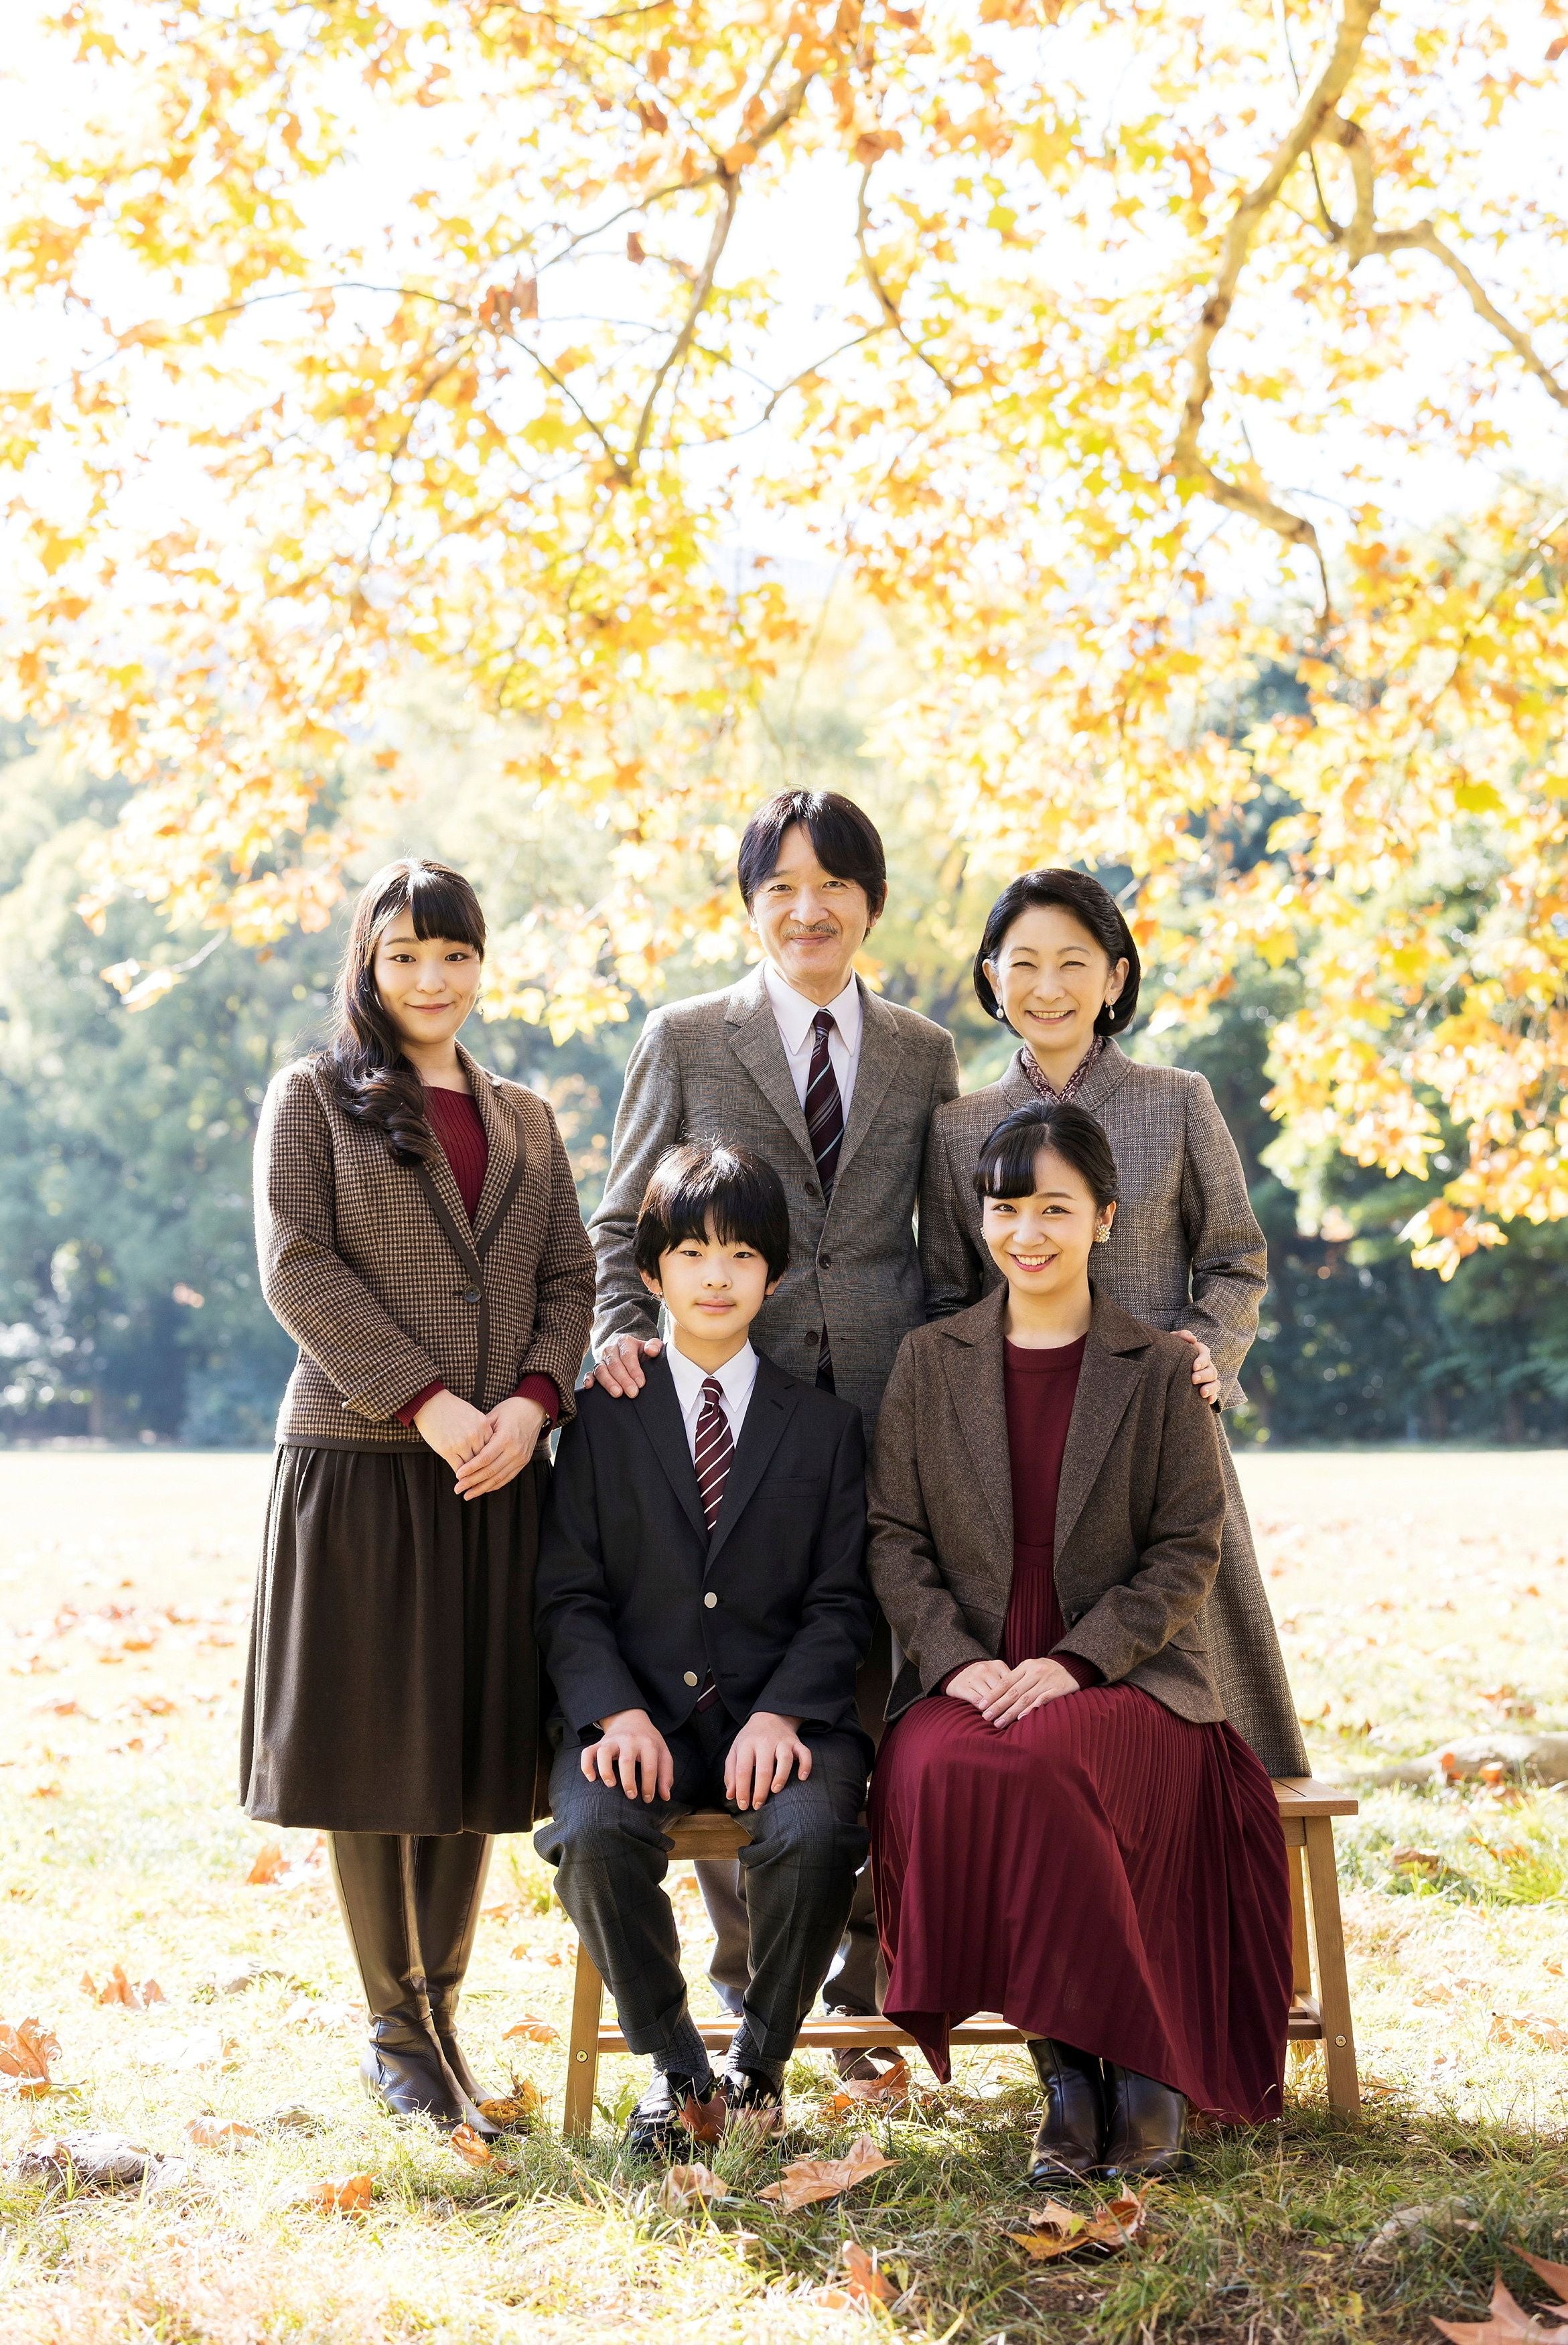 Japan’s Crown Prince Akishino (behind C) with his wife Crown Princess Kiko (behind R) and their children.